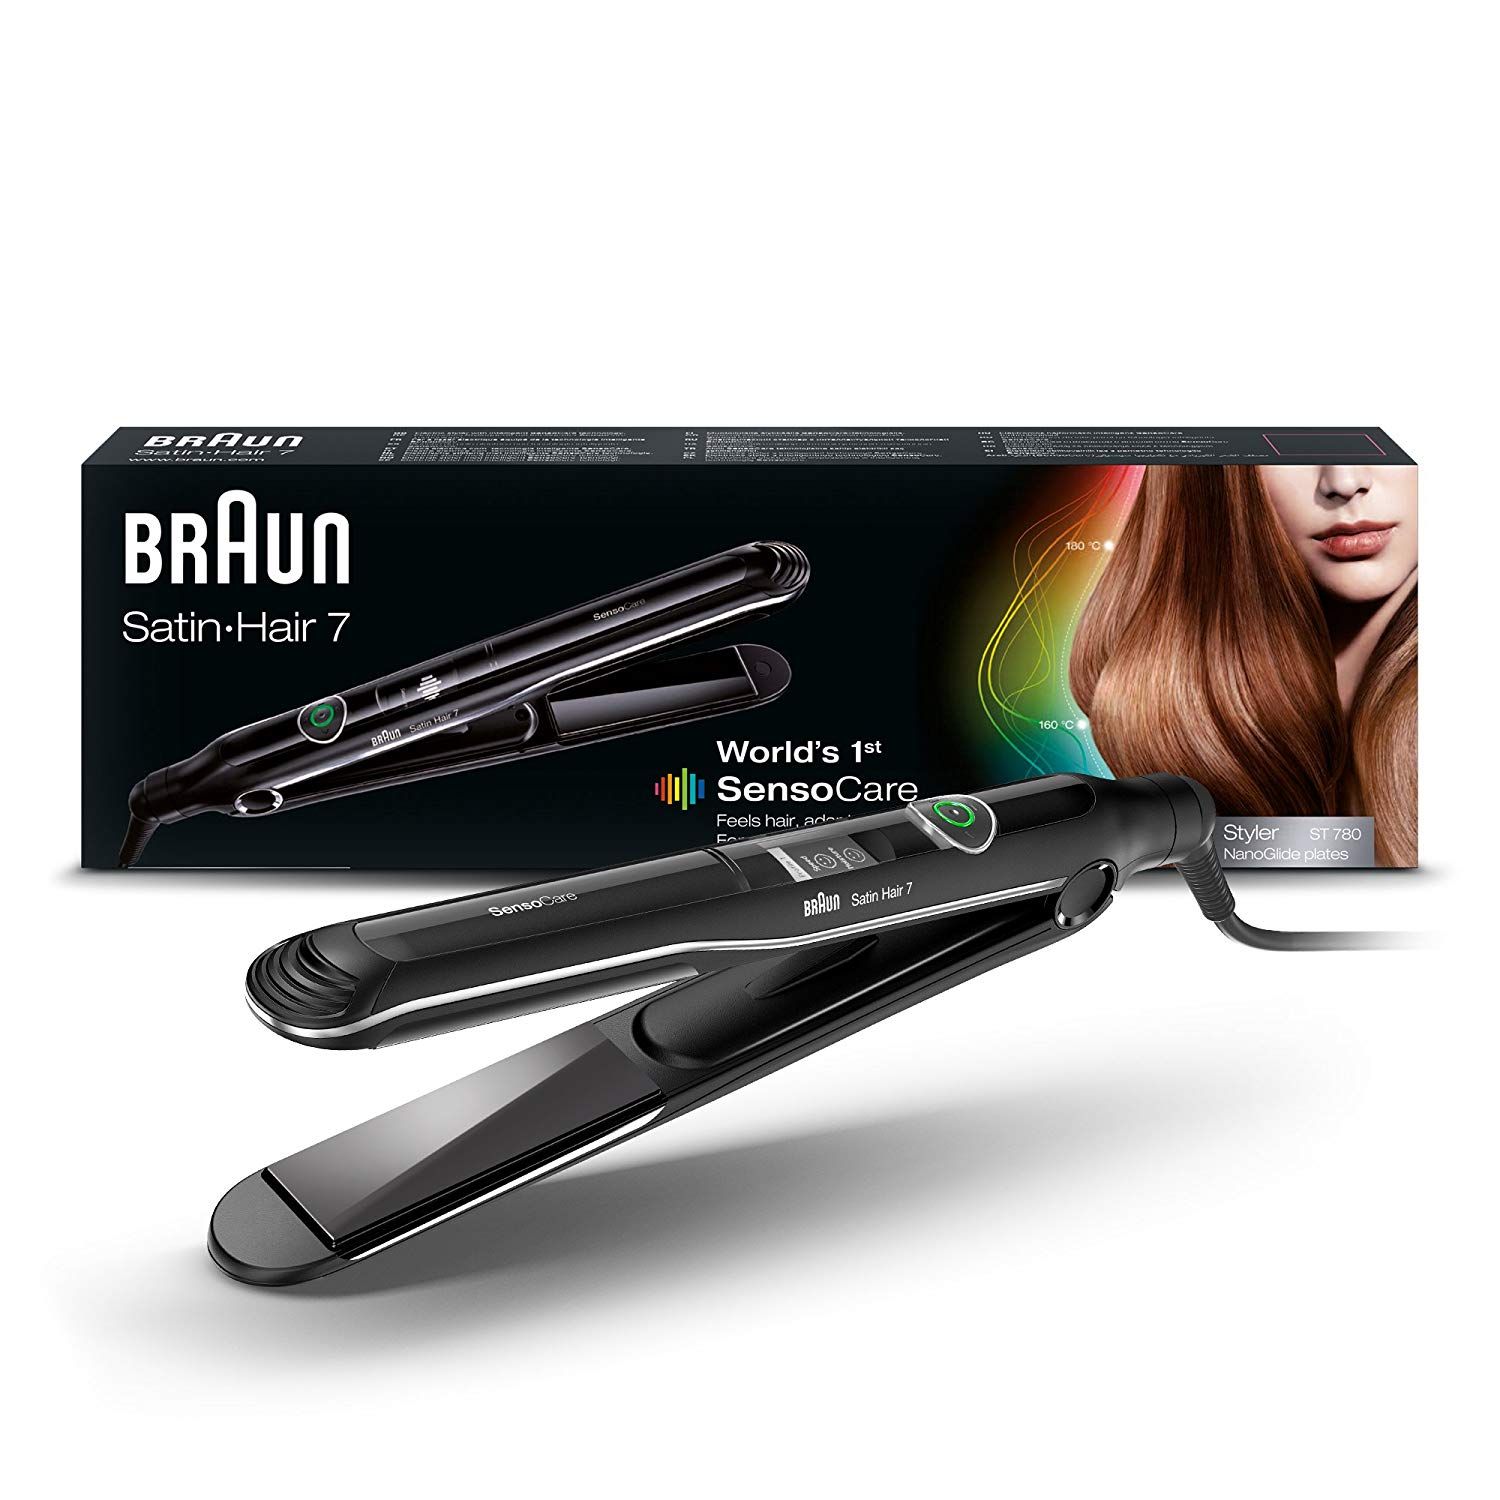  | Braun Satin-Hair 7 SensoCare ST780 Warm Straightening Iron  Black 2 Meter | الأردن